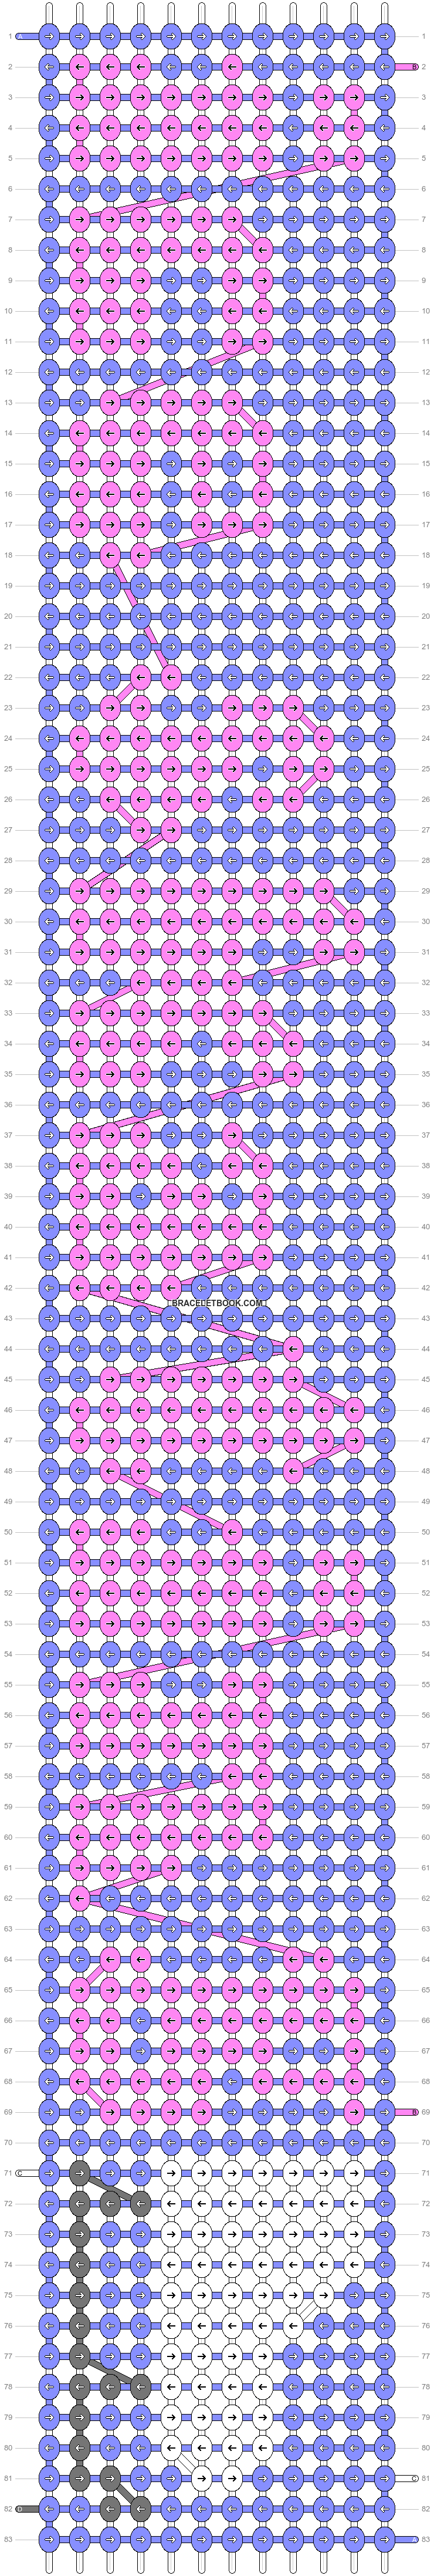 Alpha pattern #62710 pattern